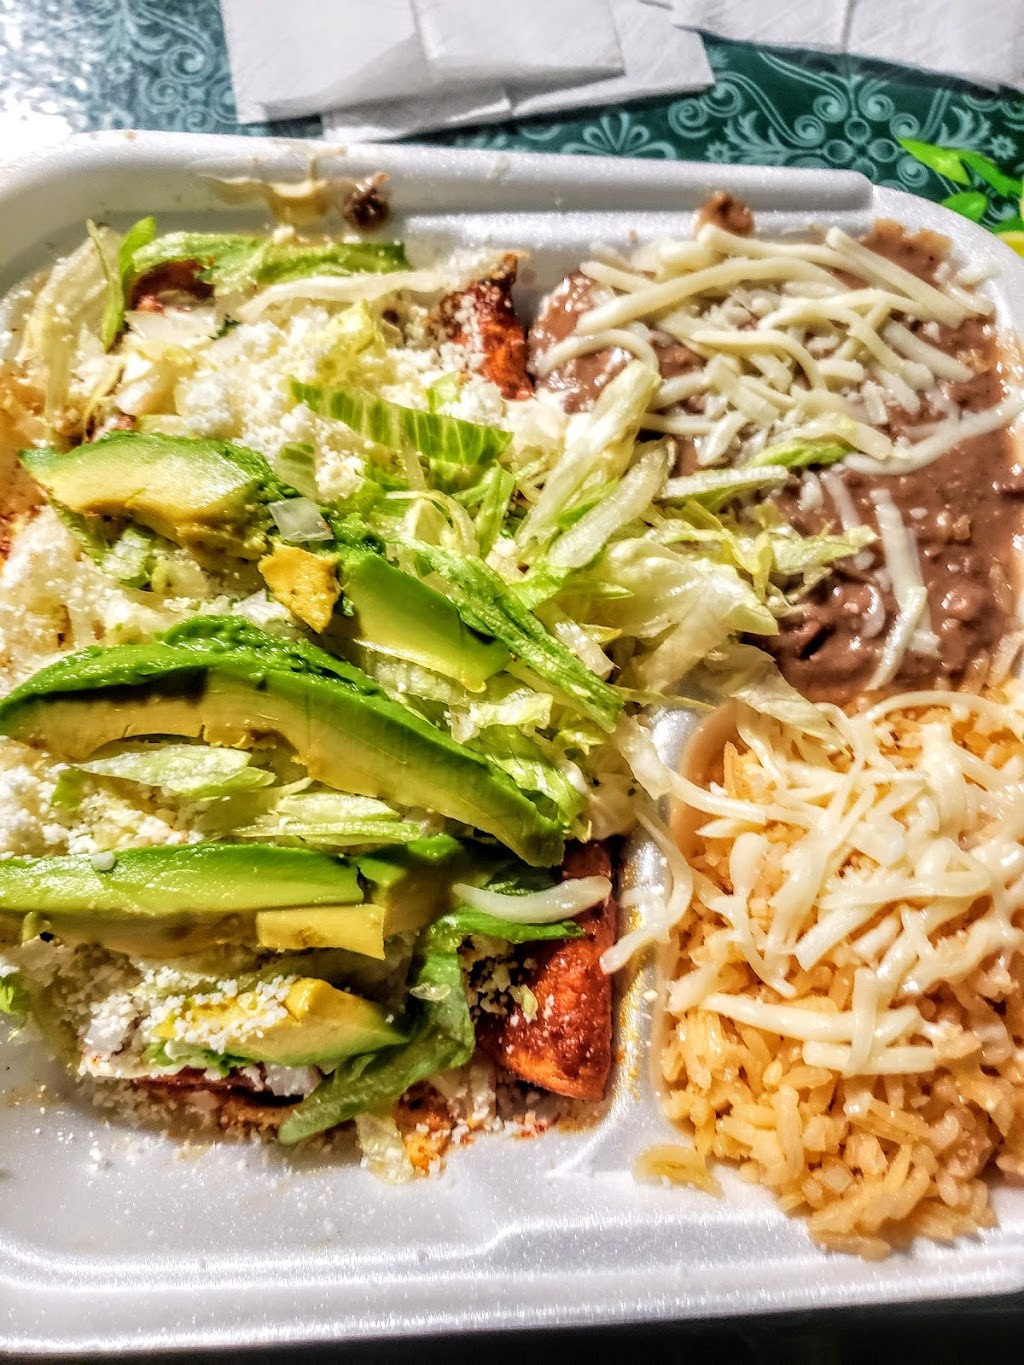 Tacos Ensenada | 1142 N Front St, Earlimart, CA 93219 | Phone: (559) 736-0536